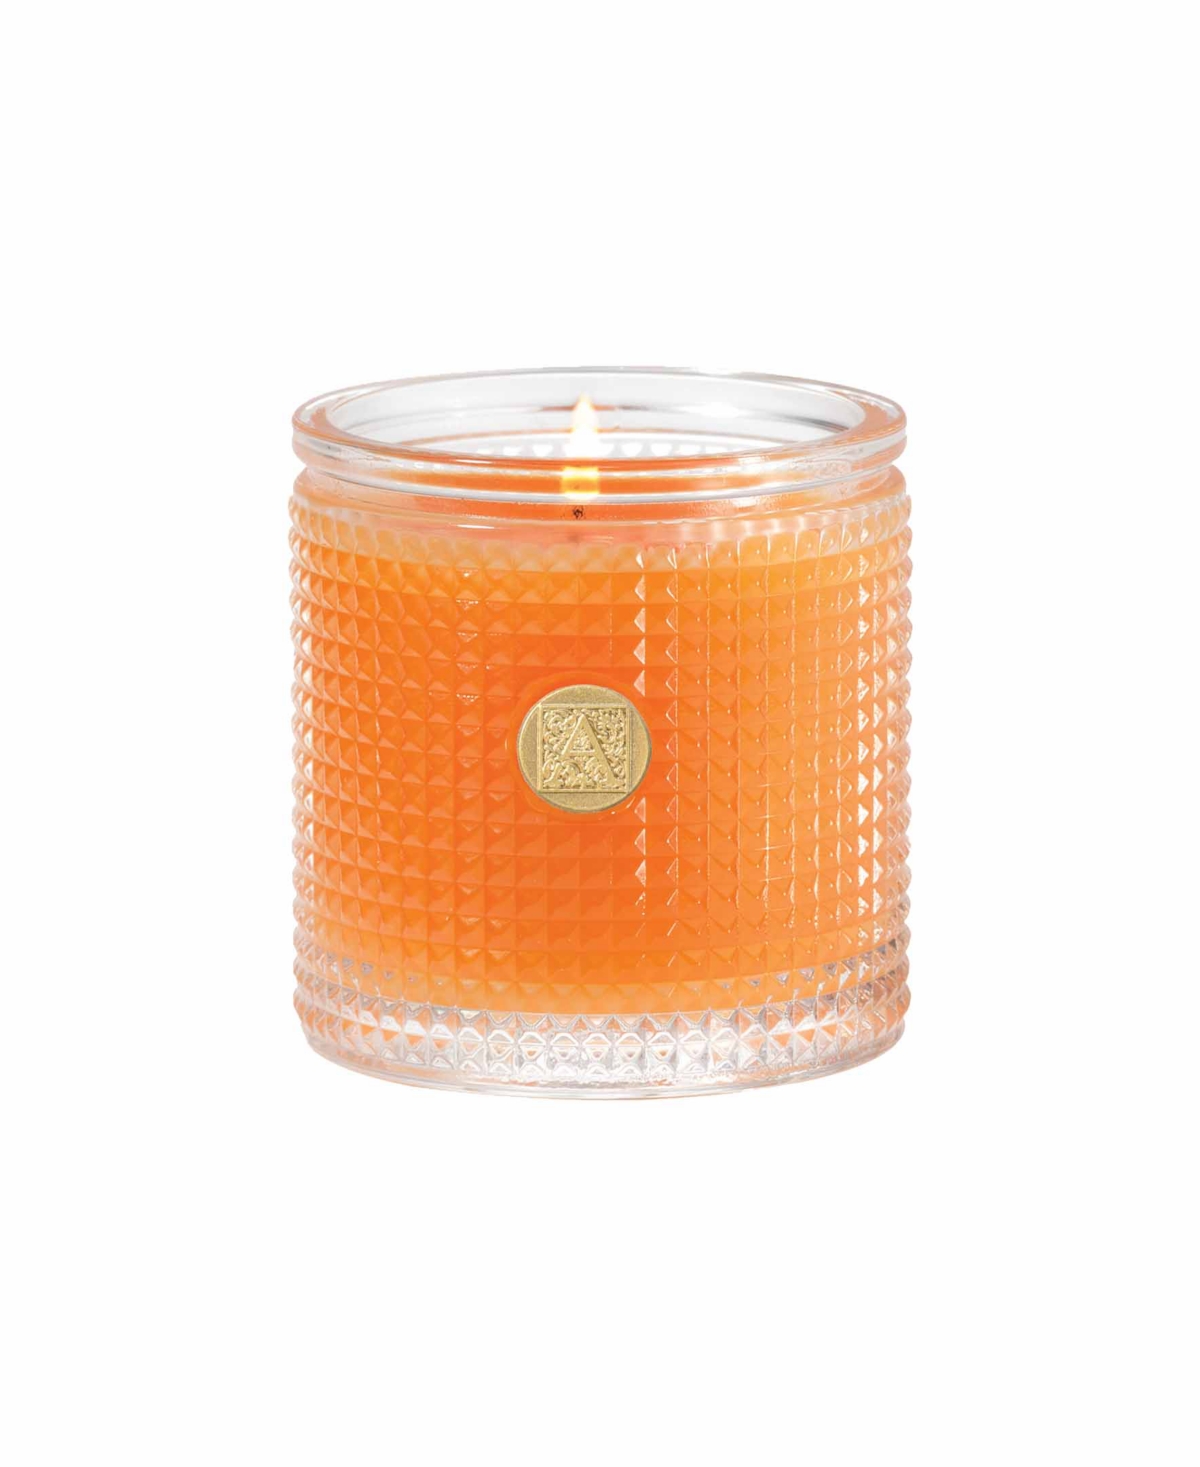 10559991 Aromatique Valencia Orange Textured Candle sku 10559991